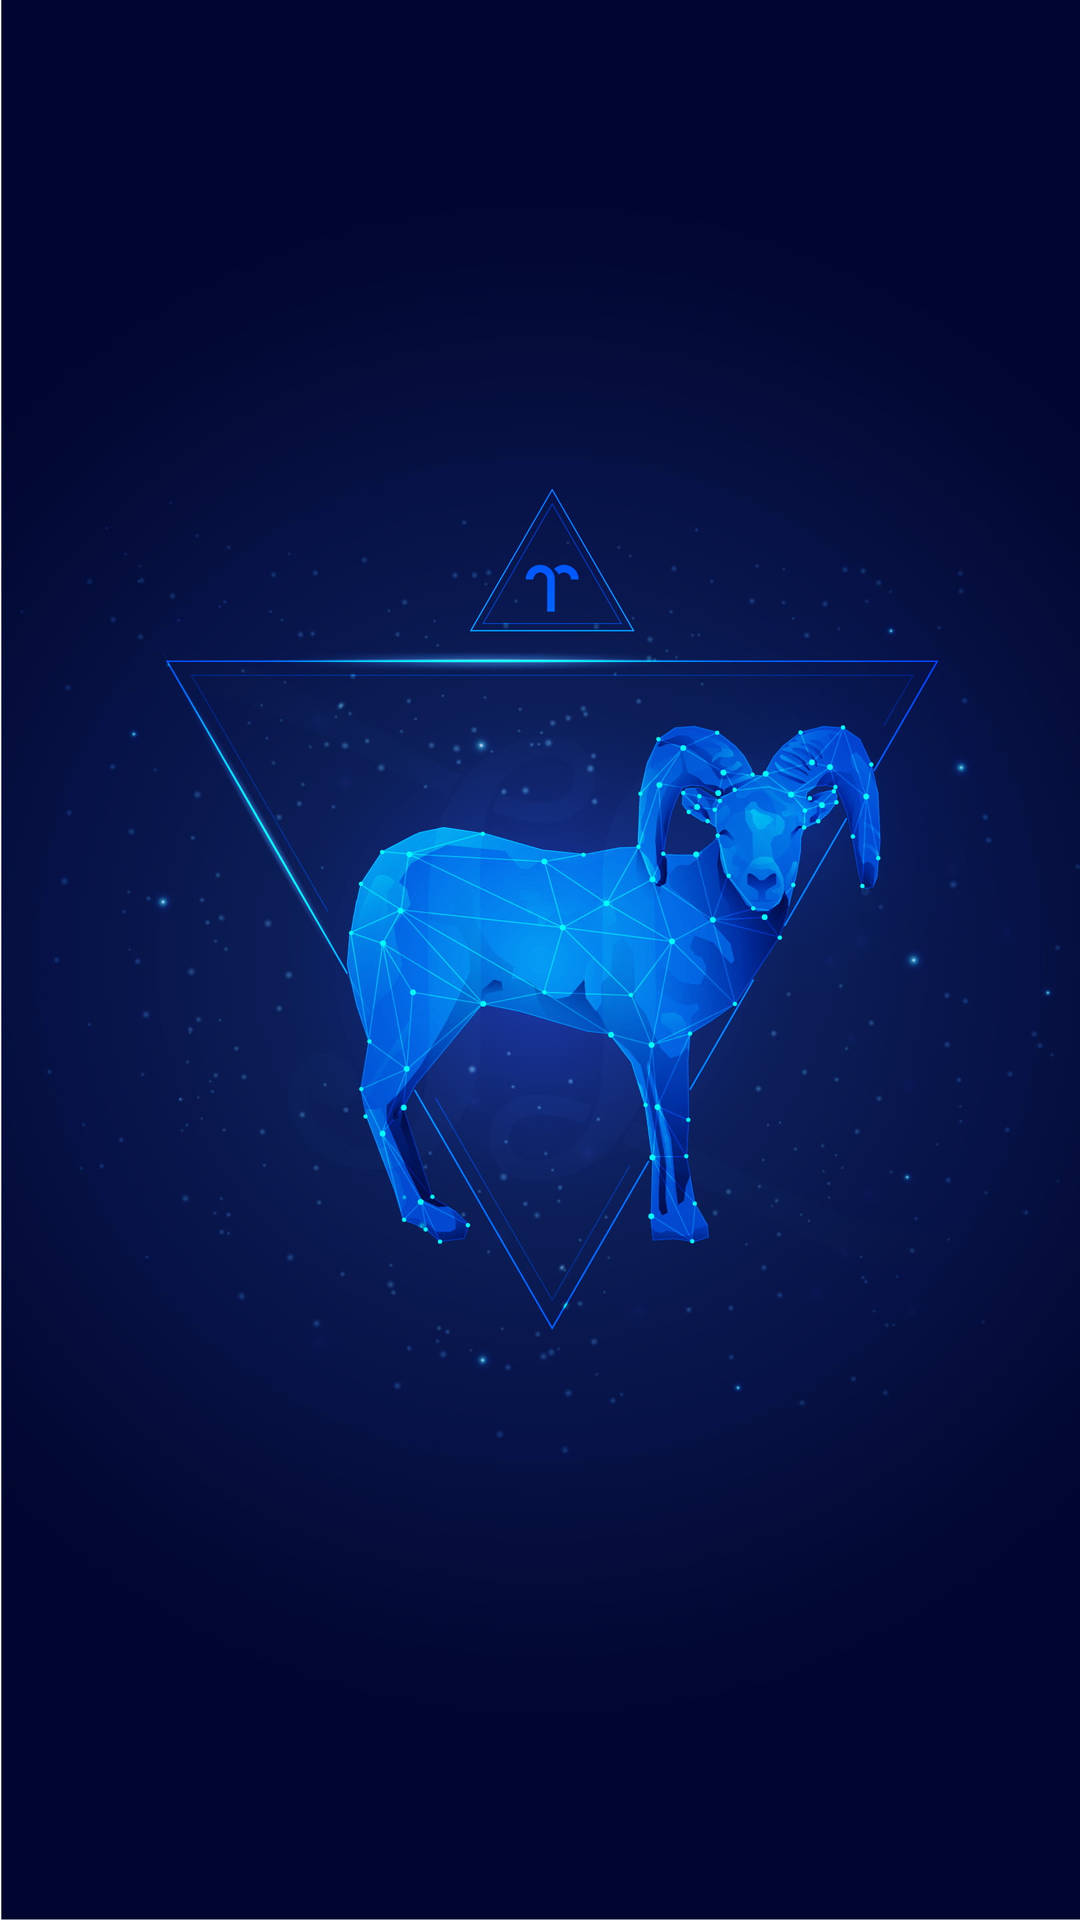 Aesthetic Blue Aries Ram Constellation